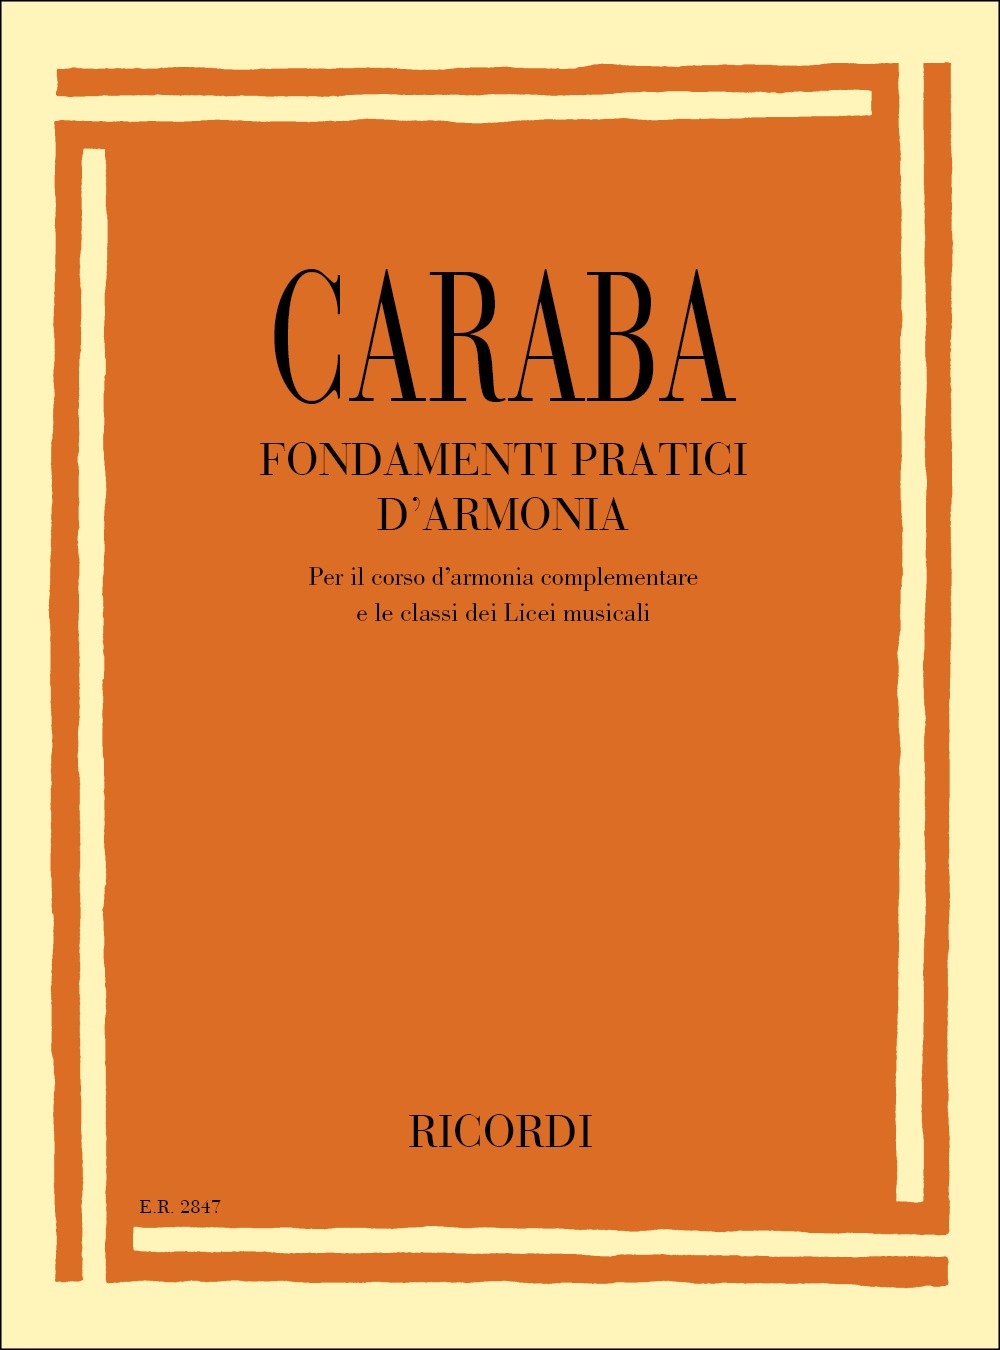 Piero Caraba: Fondamenti Pratici D'Armonia